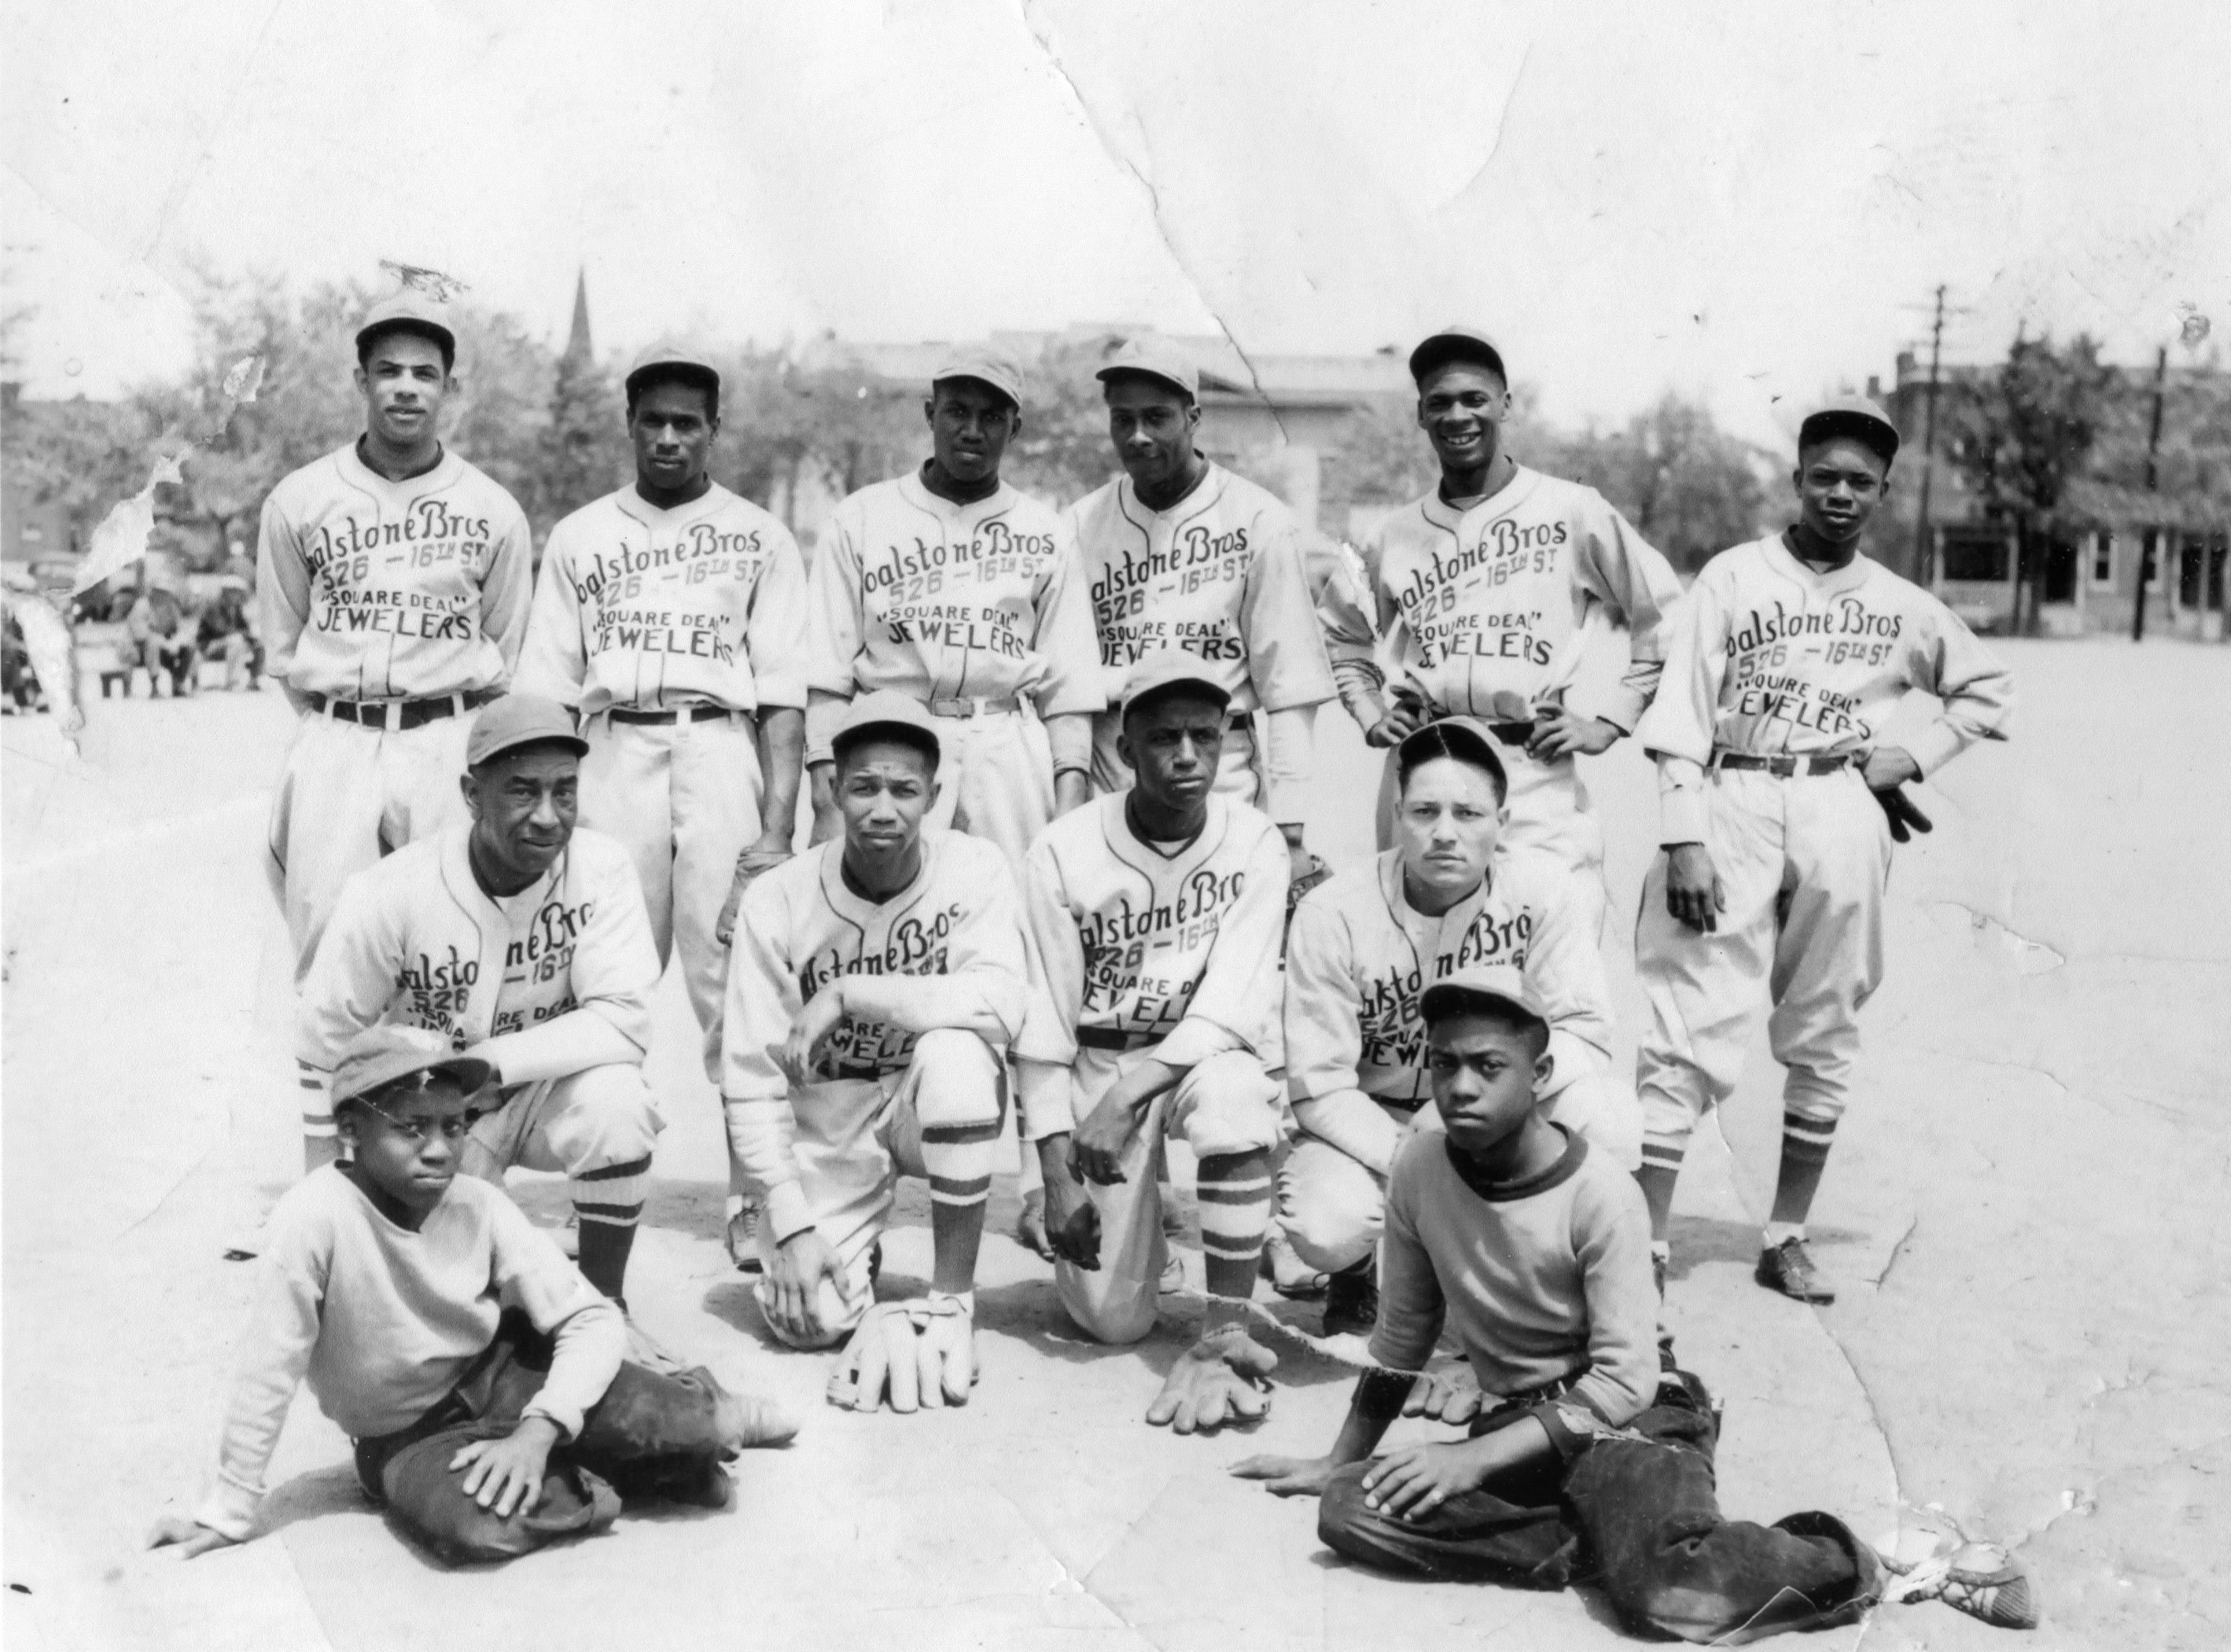 Goalstone Brothers baseball team, Denver, 1937